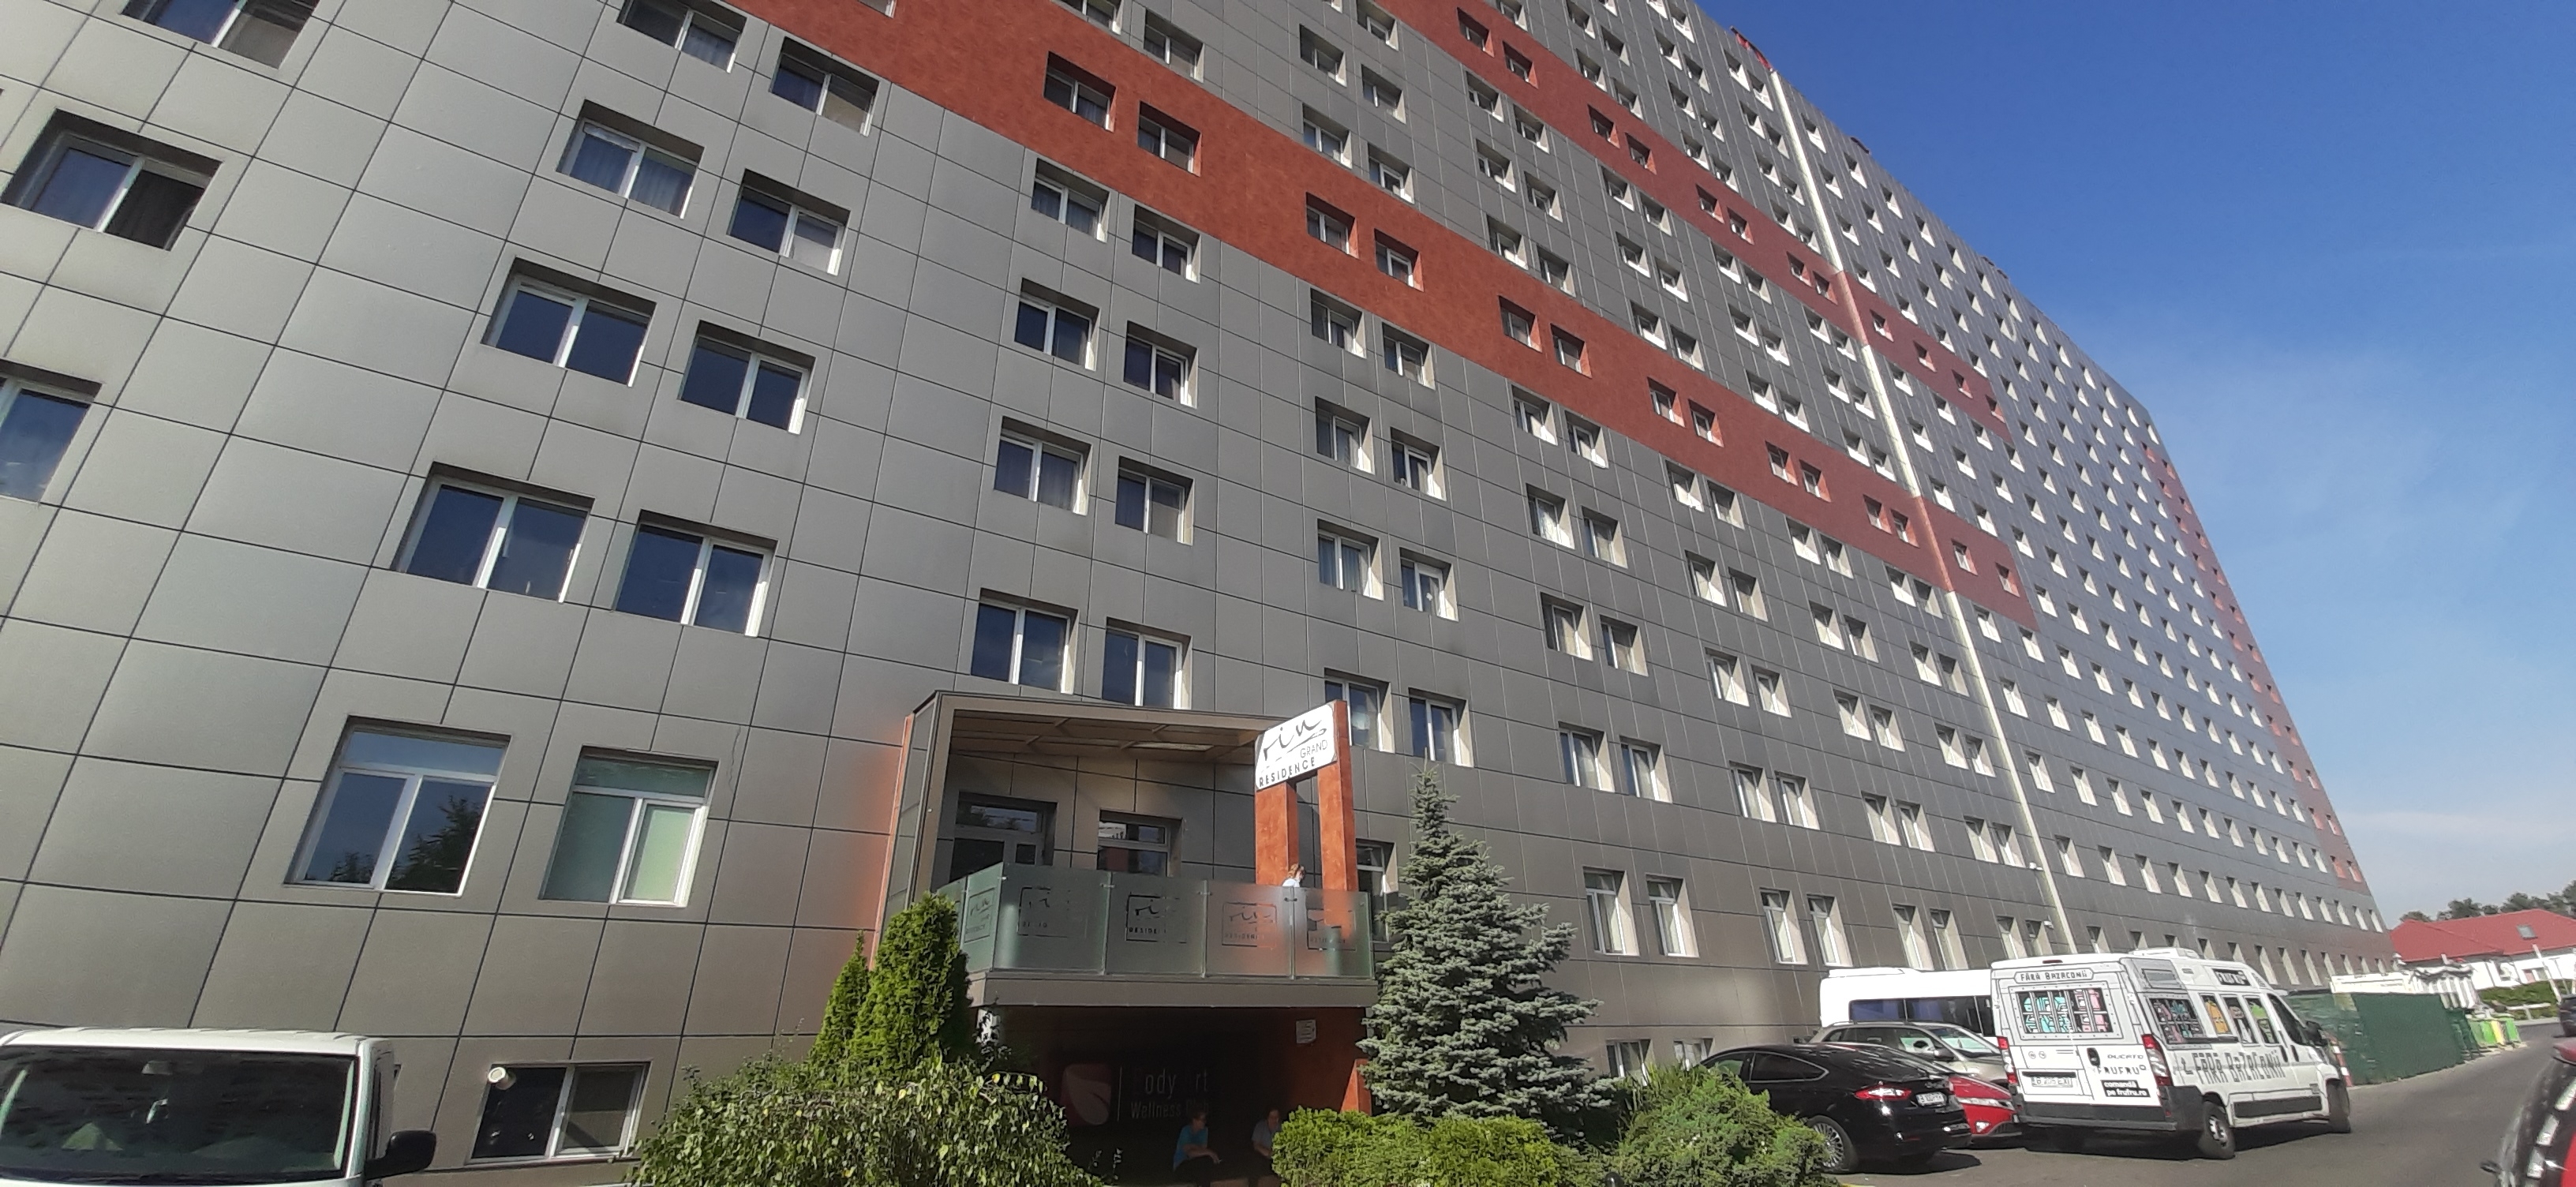 Apartament 3 camere, Bloc Rin Grand Residence, București, sector 4